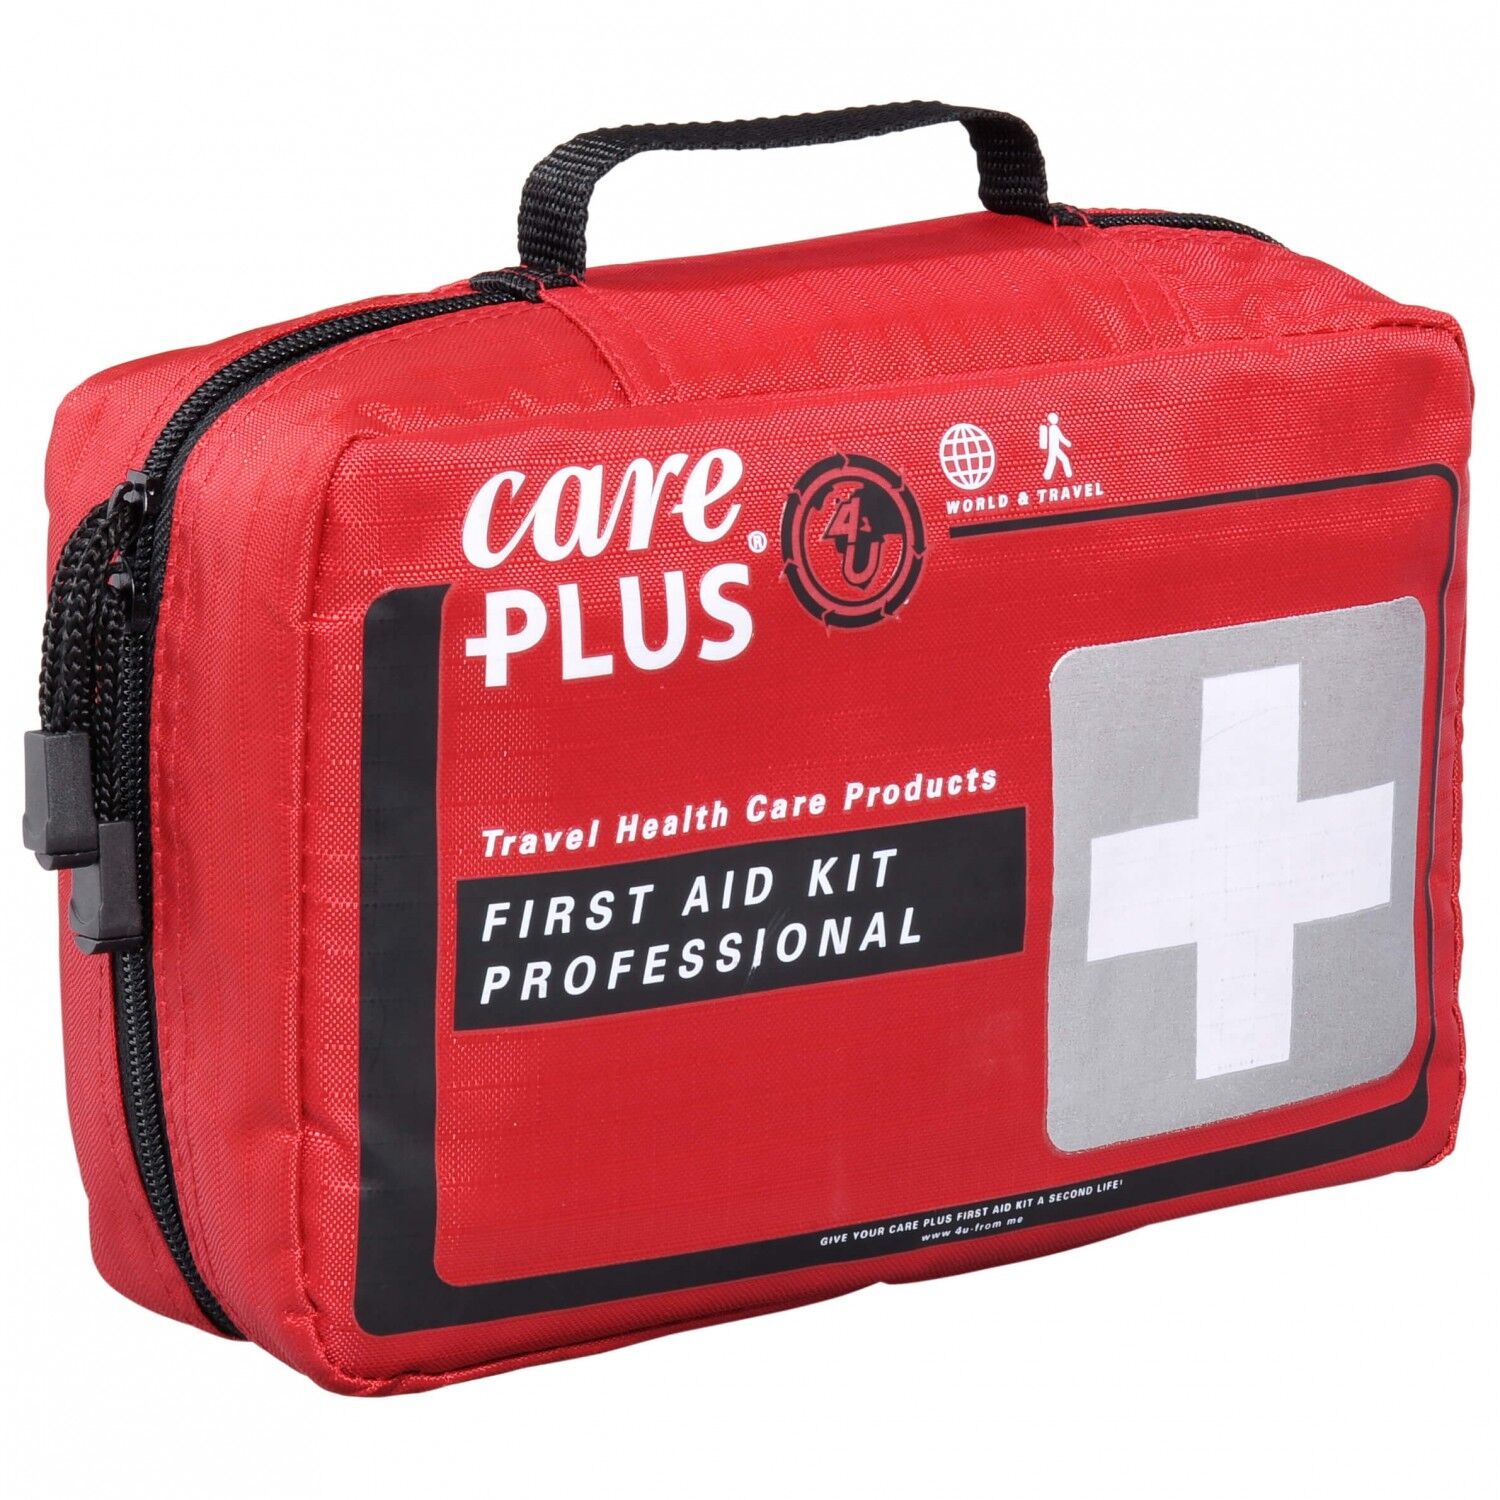 Acquistare Care Plus First Aid Kit Basic Kit di primo soccorso